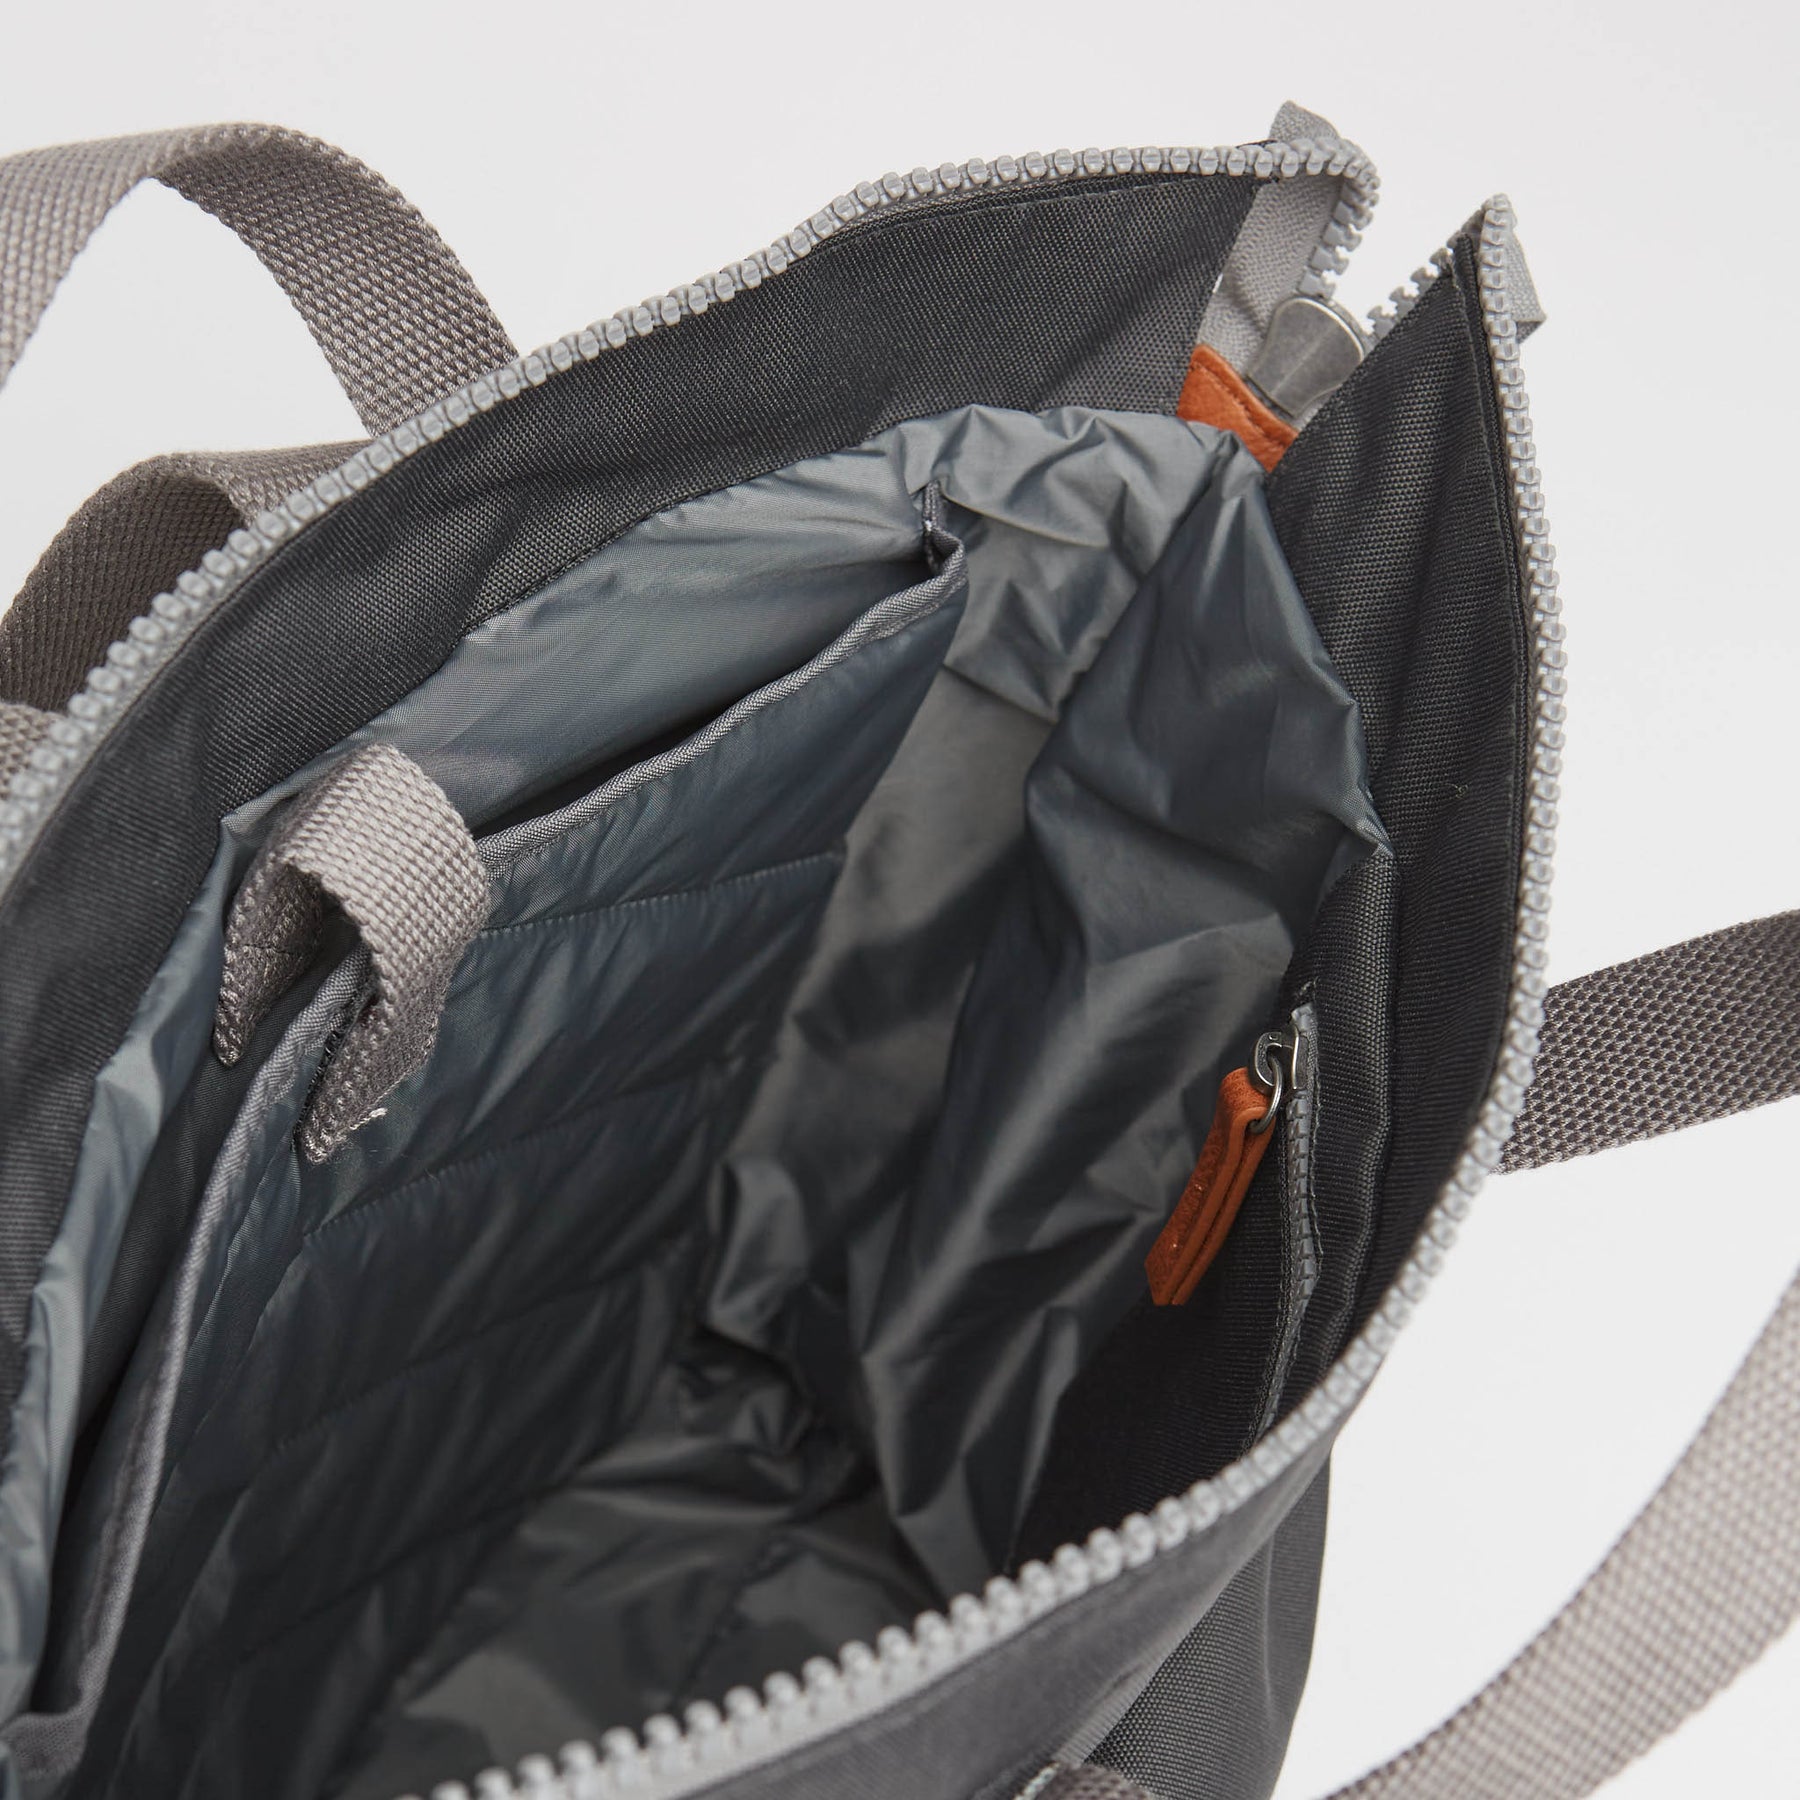 ROKA Bantry B Carbon Small Recycled Canvas Bag - OS